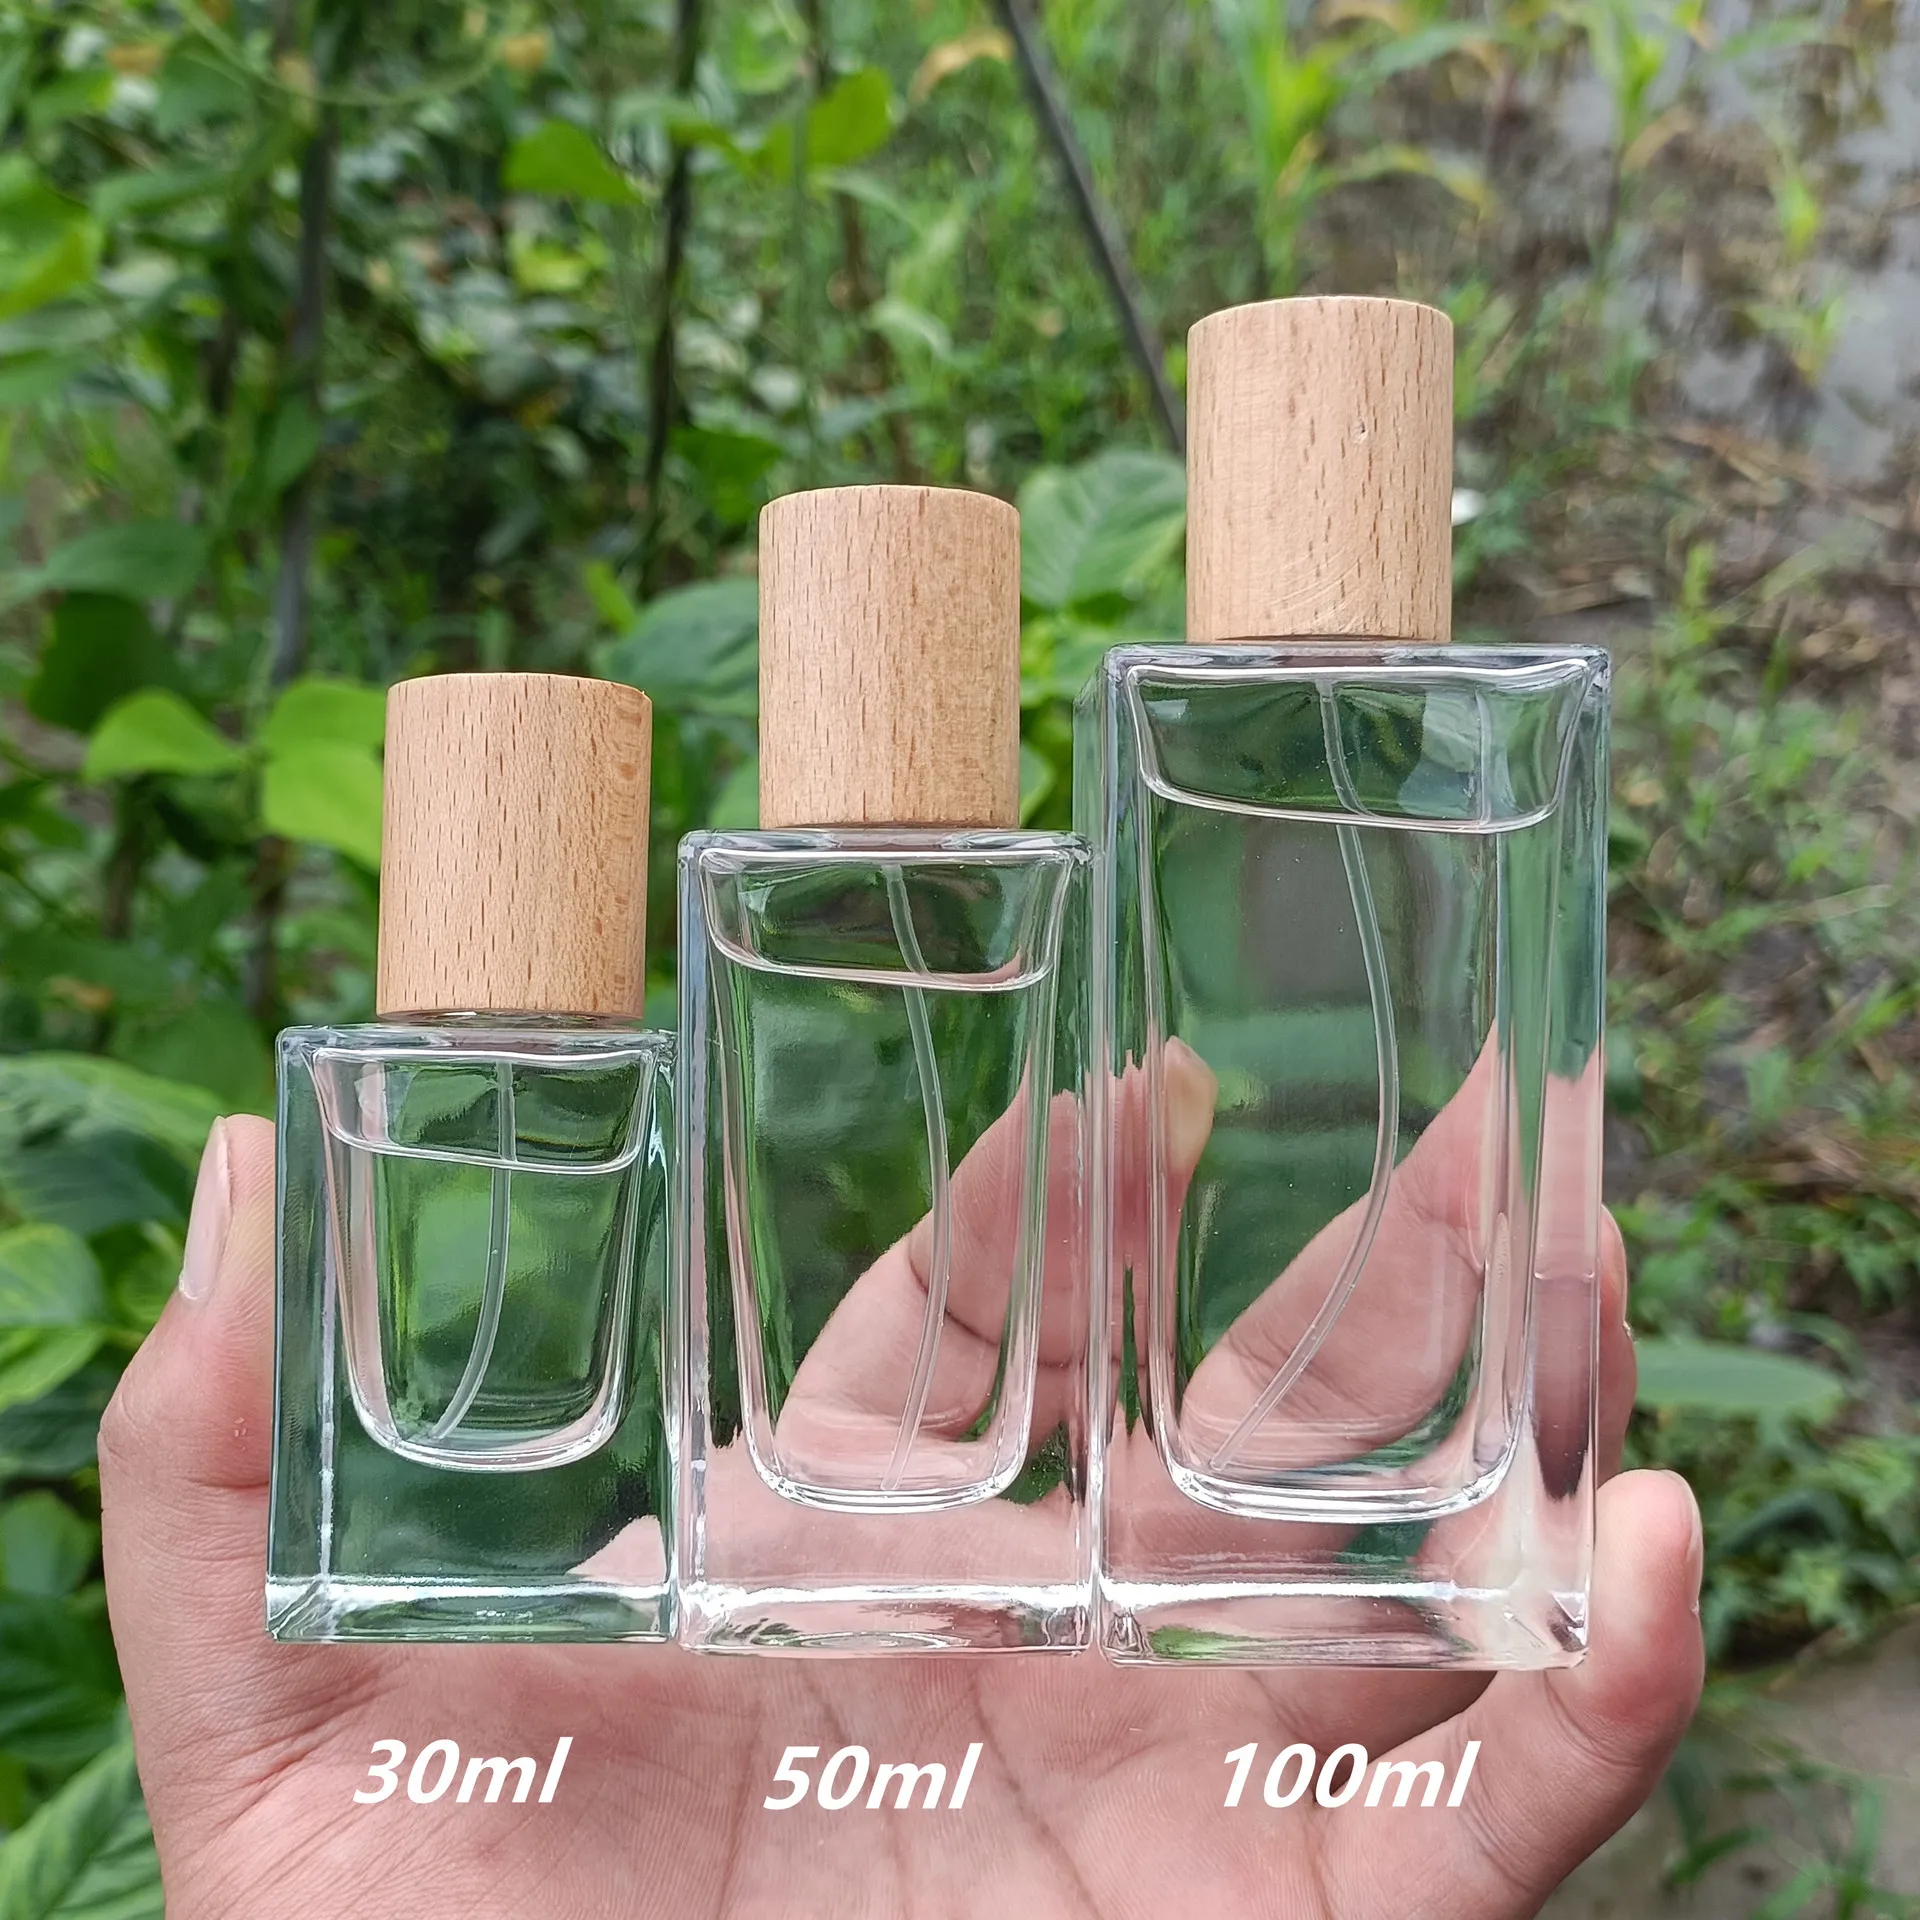 https://ae01.alicdn.com/kf/Sb51368ae196946588f98b688898dee2aN/30-50-100ml-Perfume-Bottle-Clear-Glass-Refillable-Mist-Spray-Atomizer-Liquid-Empty-Cosmetic-Container-Alcohol.jpg